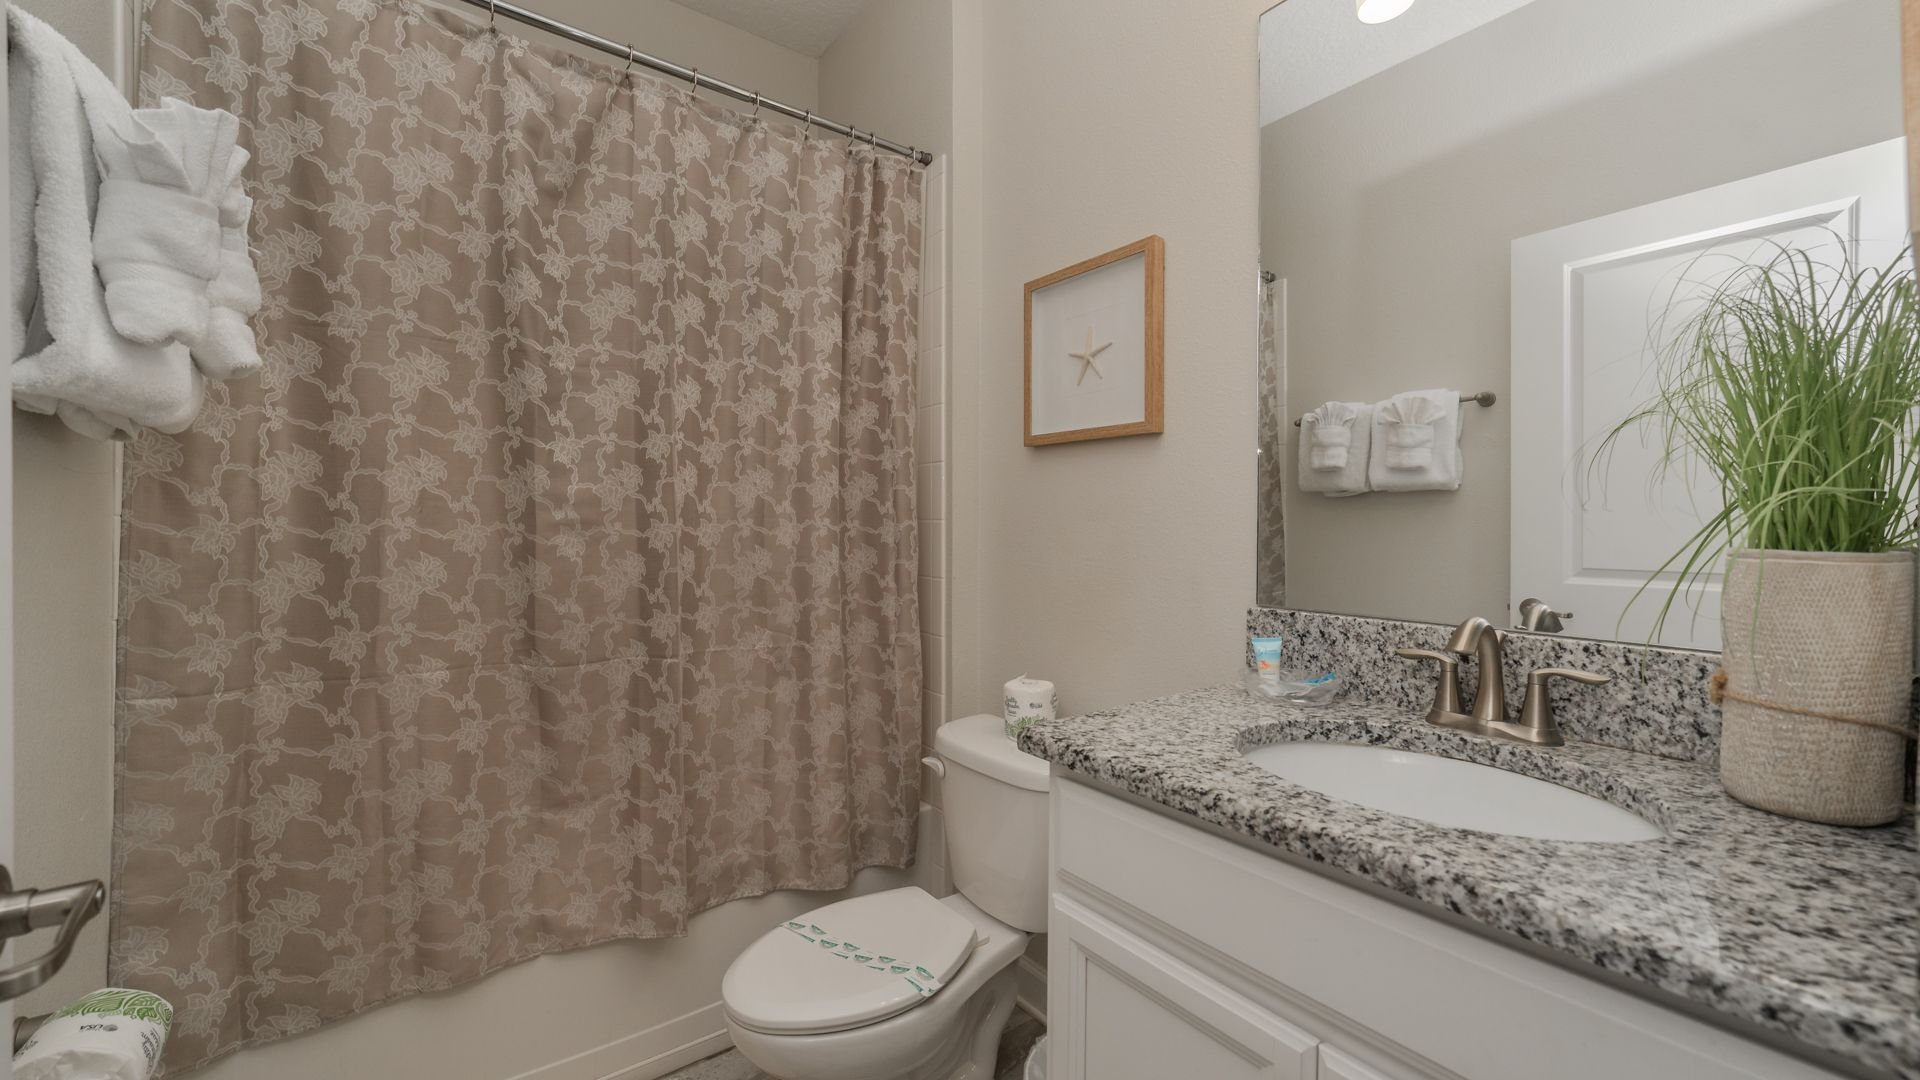 Hall Bathroom 3 Downstairs
Tub/Shower Combo